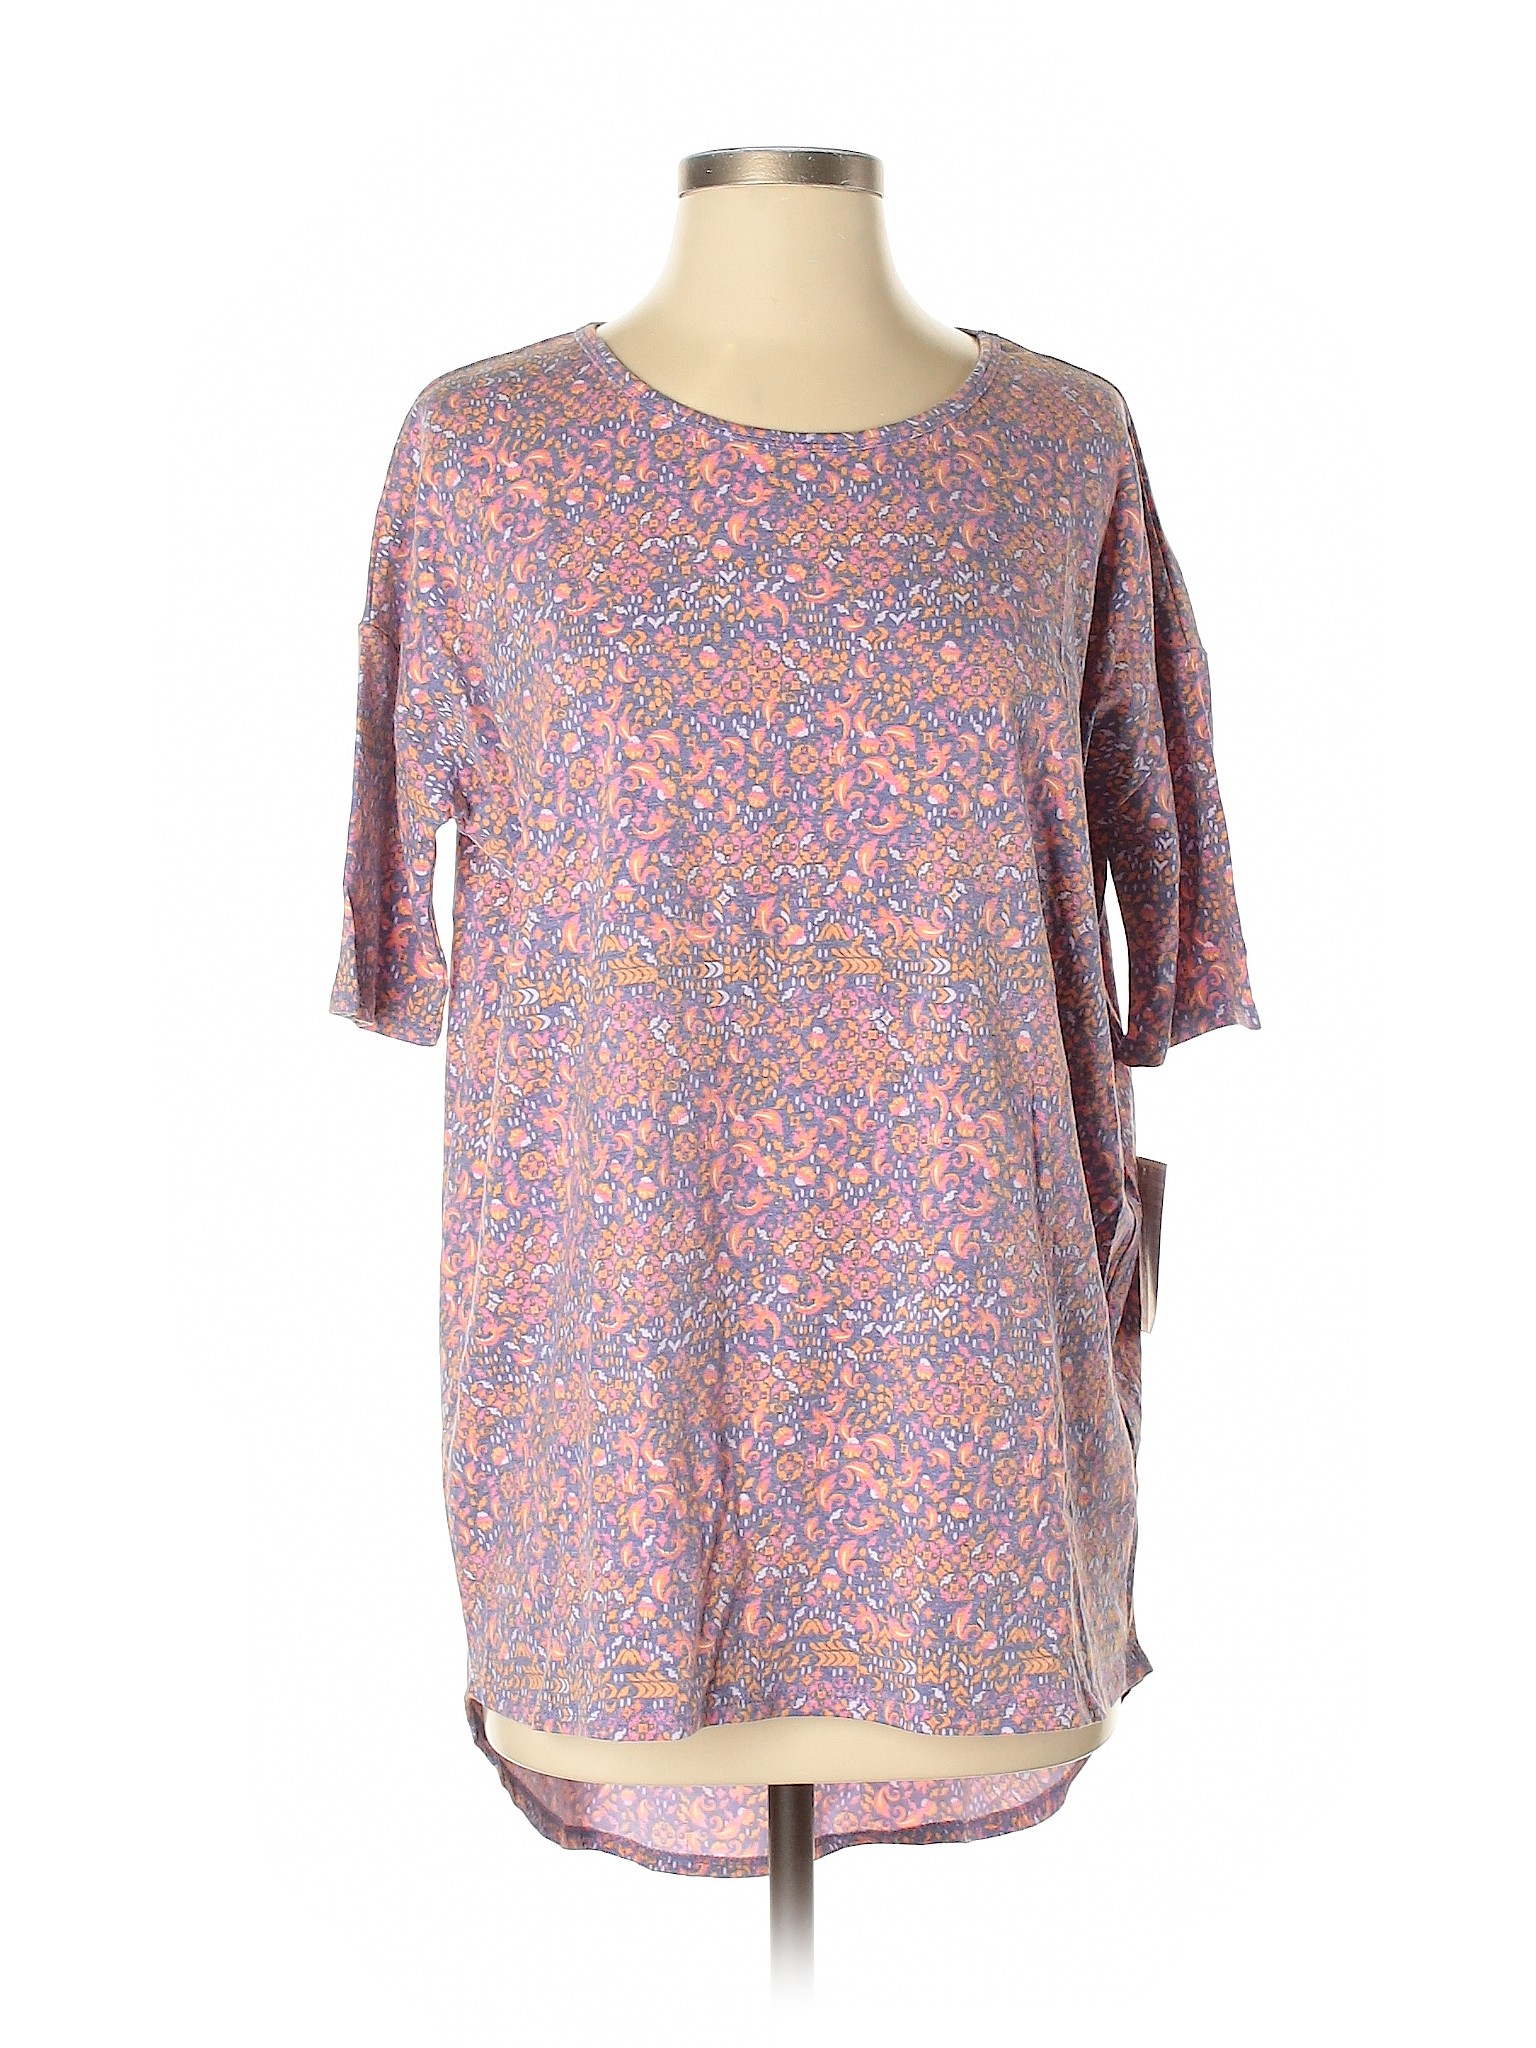 NWT Lularoe Women Purple Short Sleeve T-Shirt XS | eBay